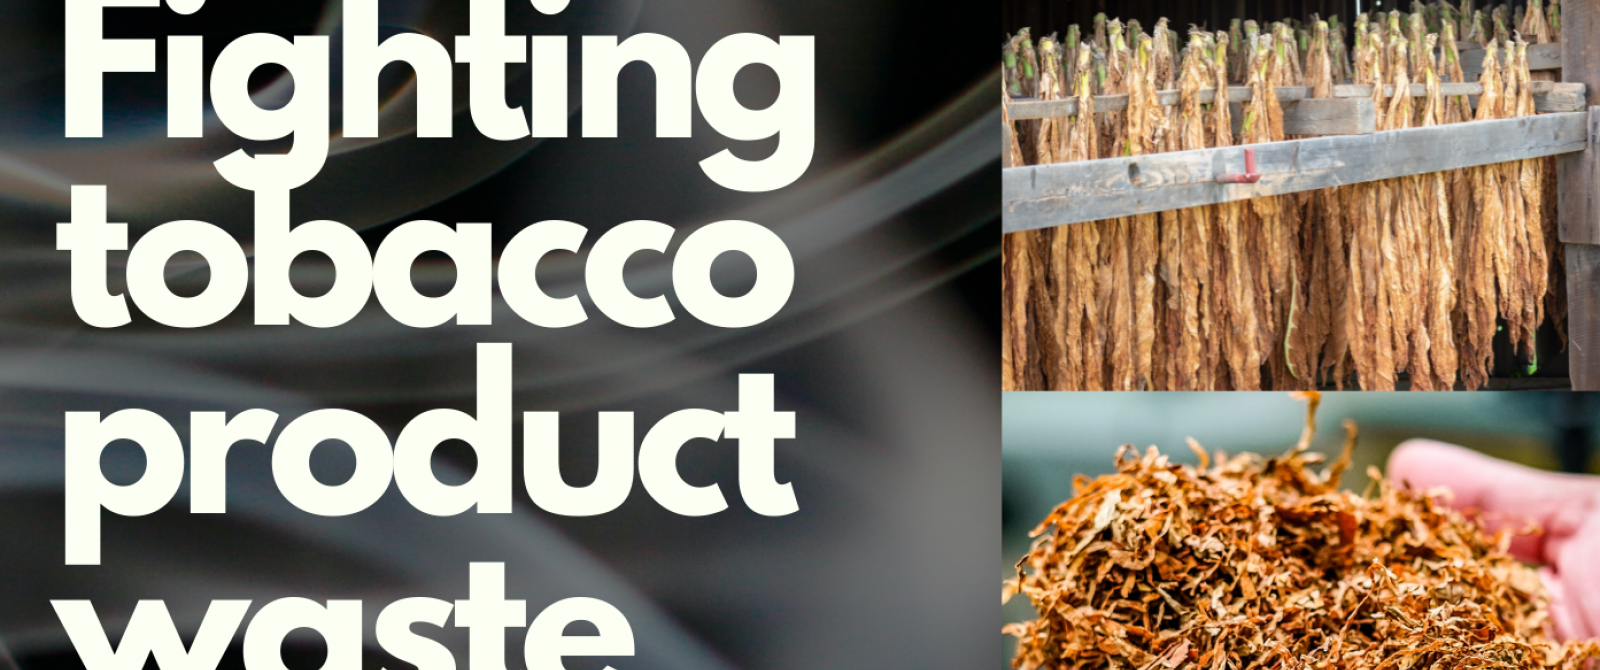 WNTD webinar_Tobacco product waste